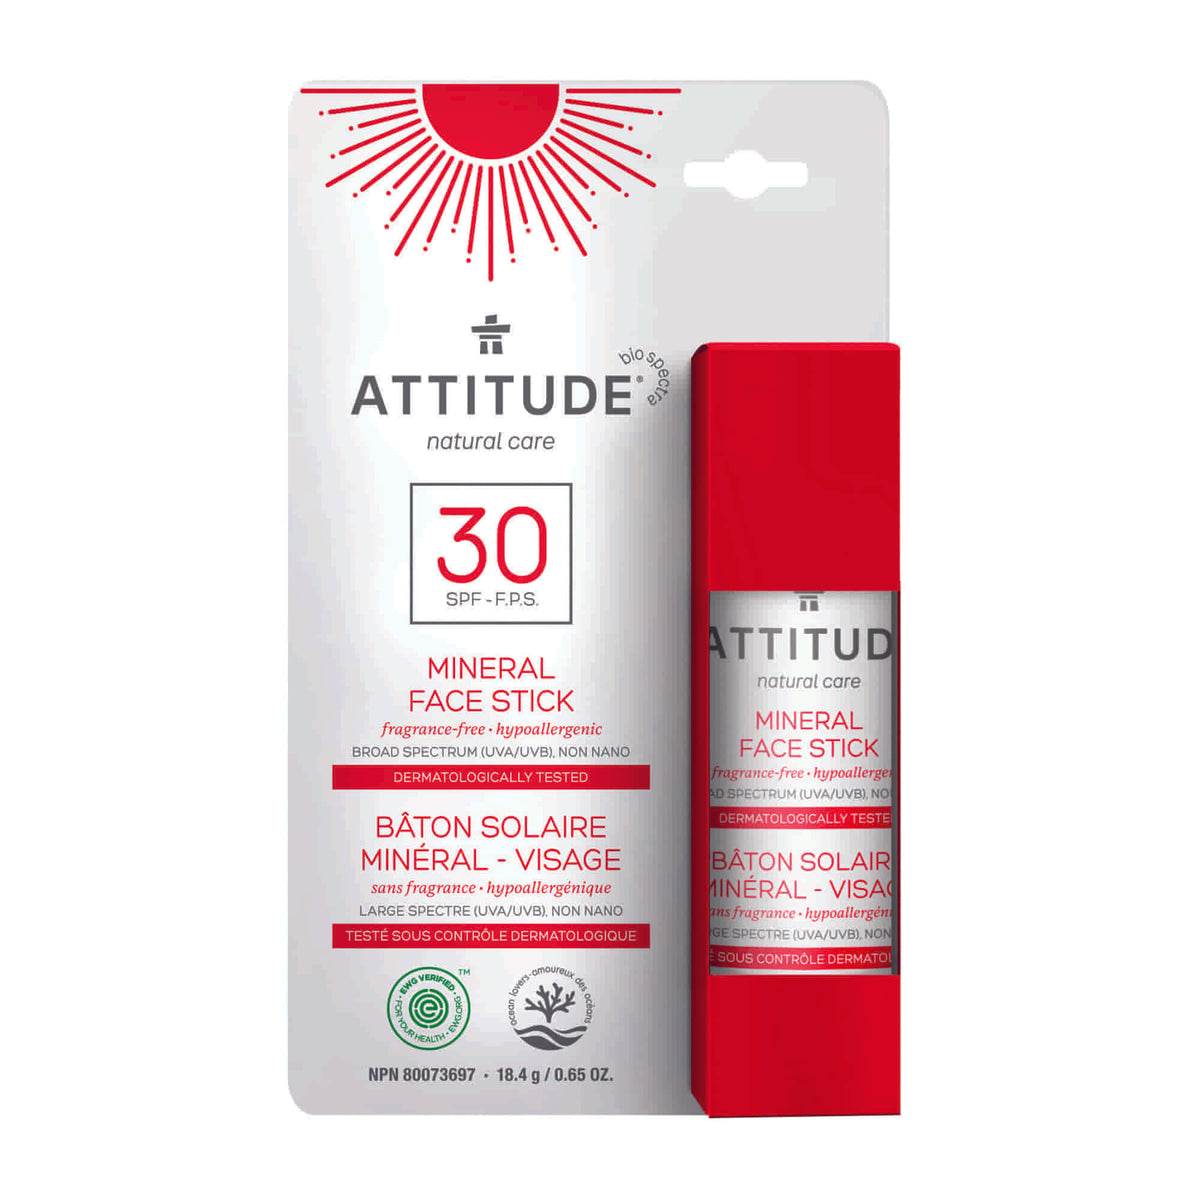 Attitude - Moisturizer Face Stick : SPF 30 - by ATTITUDE |ProCare Outlet|